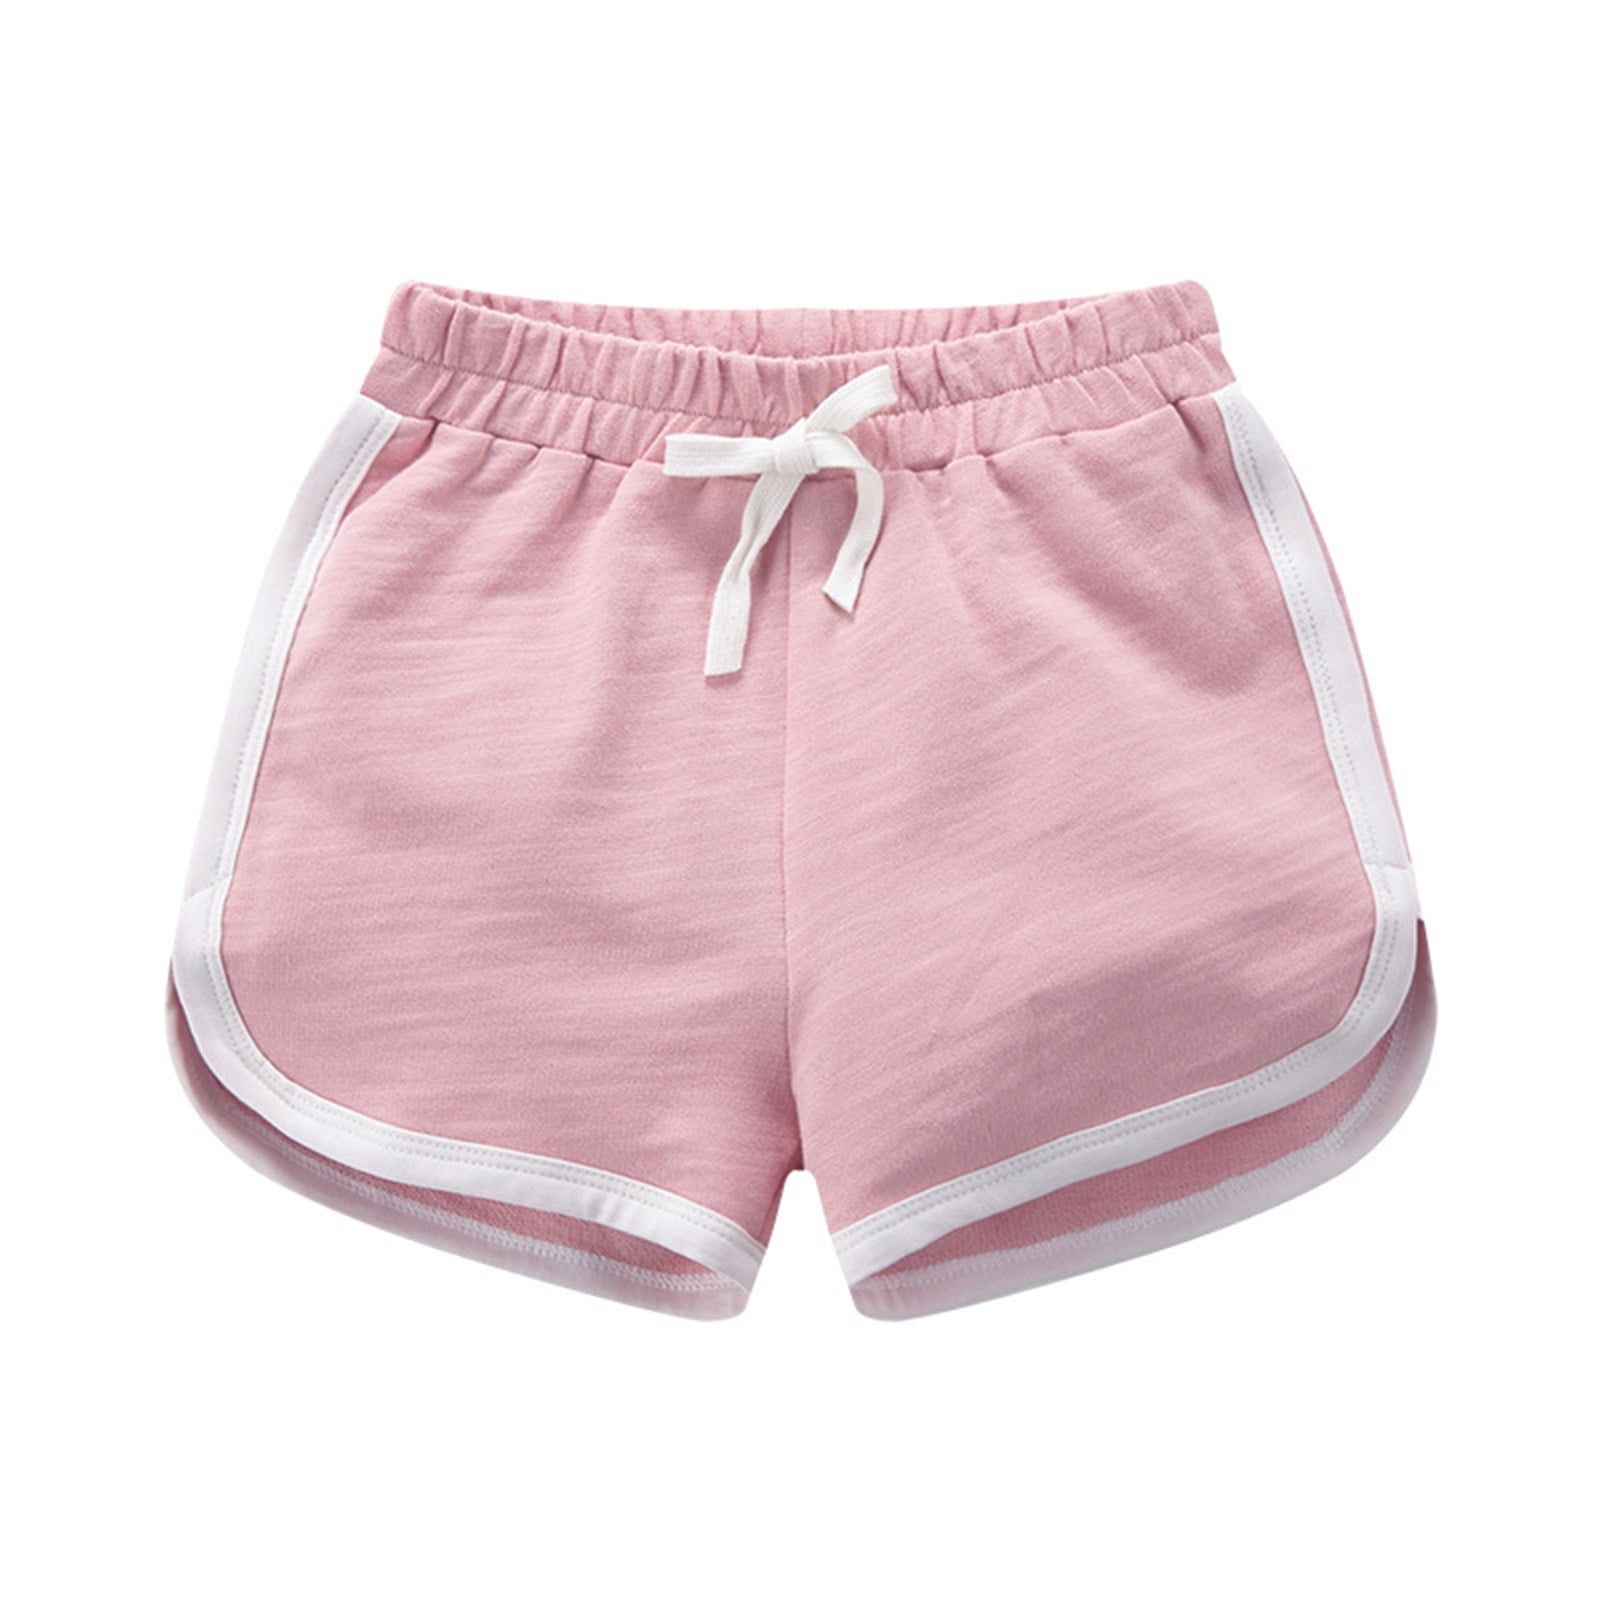 ASEIDFNSA Girls Spandex Shorts Girls Clothes Size 10 12 Thick